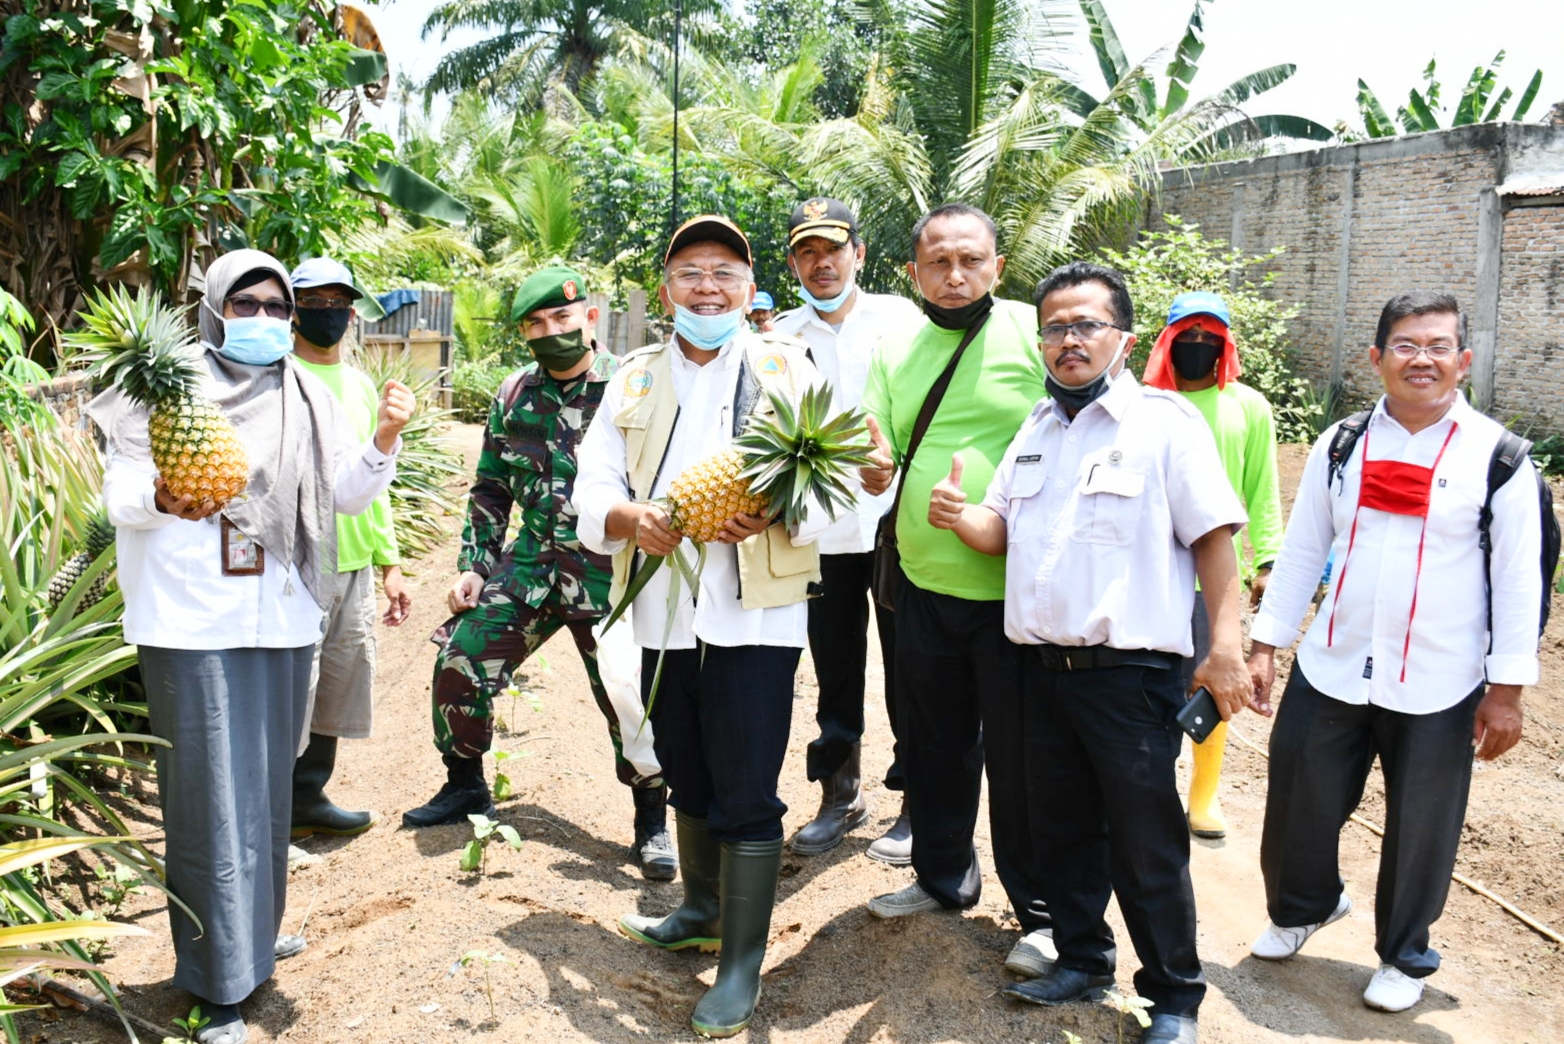 Pengabdian Masyarakat Bersama: Strategi Pemasaran Di Tengah Pandemi Covid-19 Bagi Pelaku UMKM di Kota Binjai Sumatera Utara